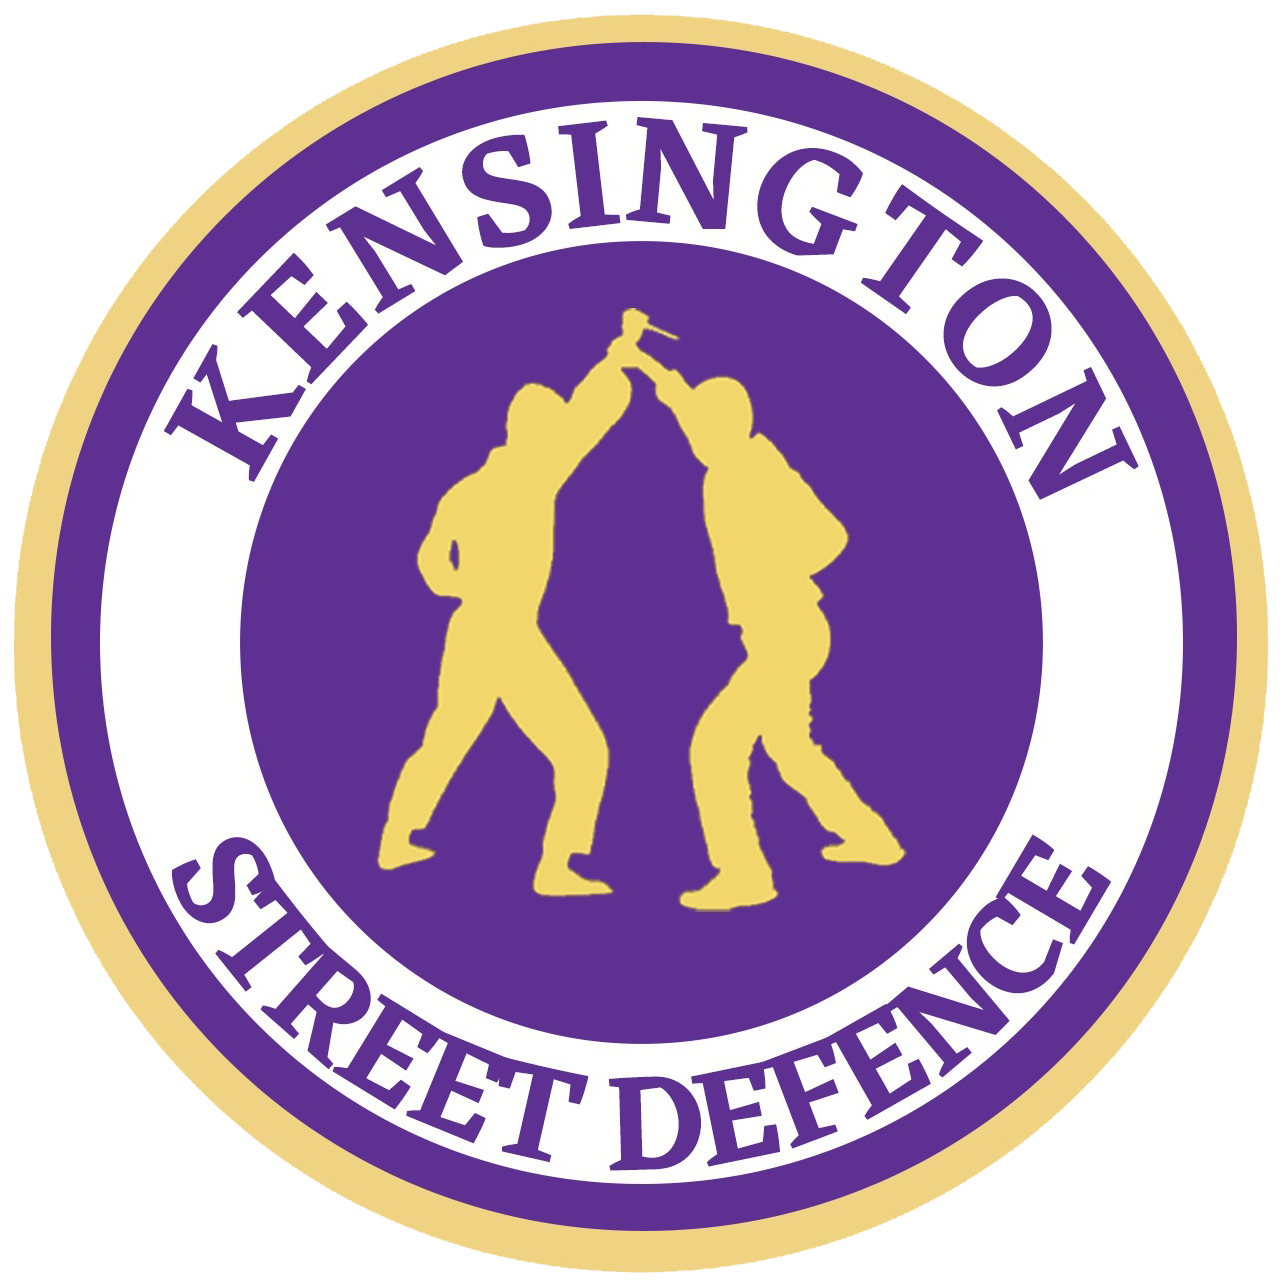 Kensington Street Defense - Brand Logo